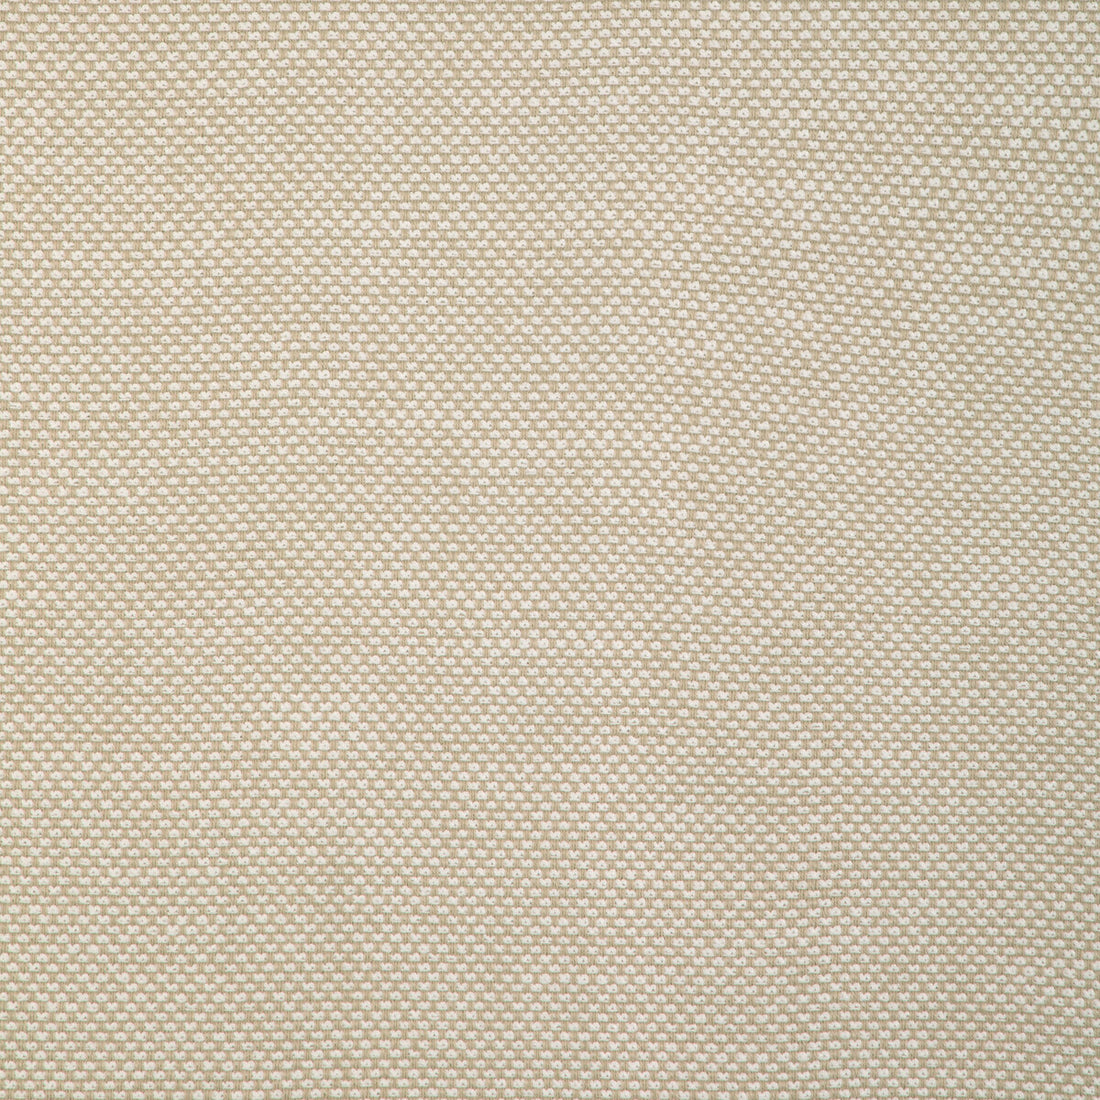 Kravet Smart fabric in 36999-116 color - pattern 36999.116.0 - by Kravet Smart in the Pavilion collection